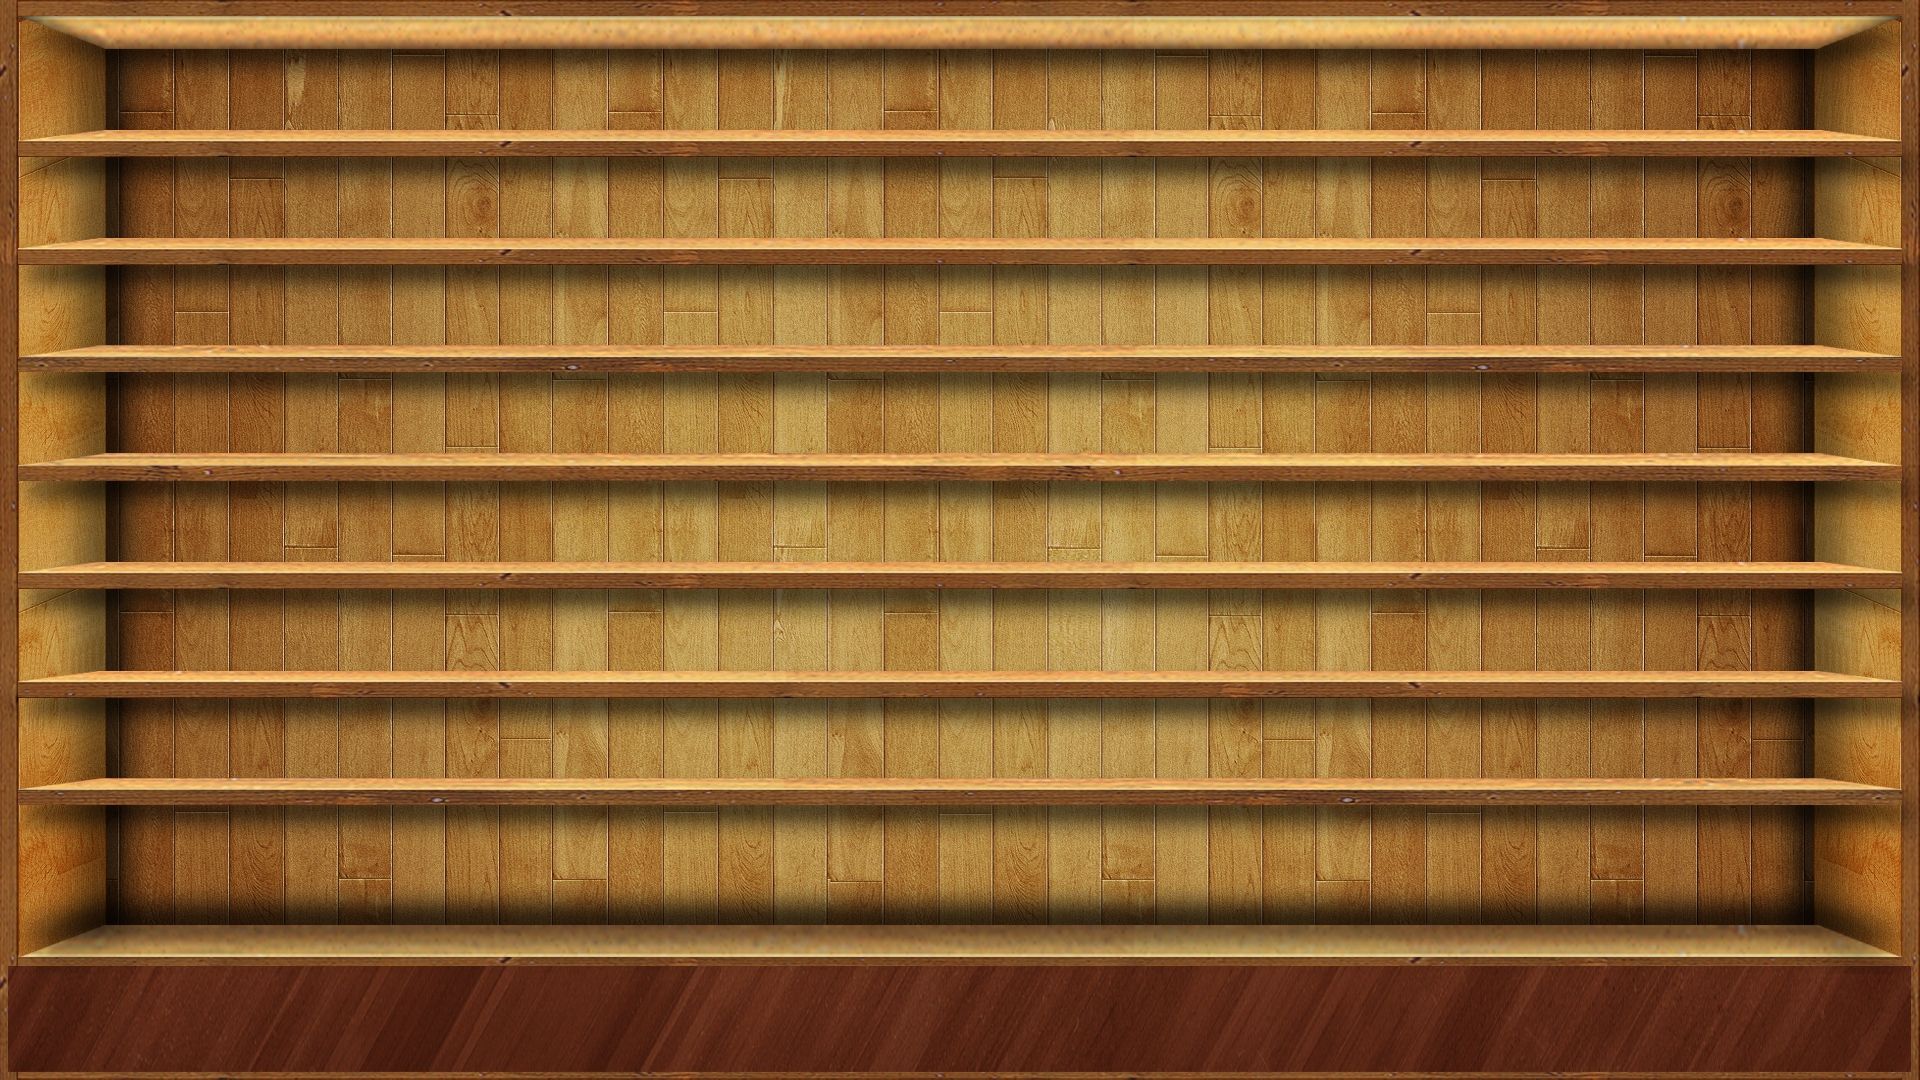 Wood Shelves Wallpaper 2 Samirpa On Deviantart Regarding Wood For Shelves (View 10 of 15)